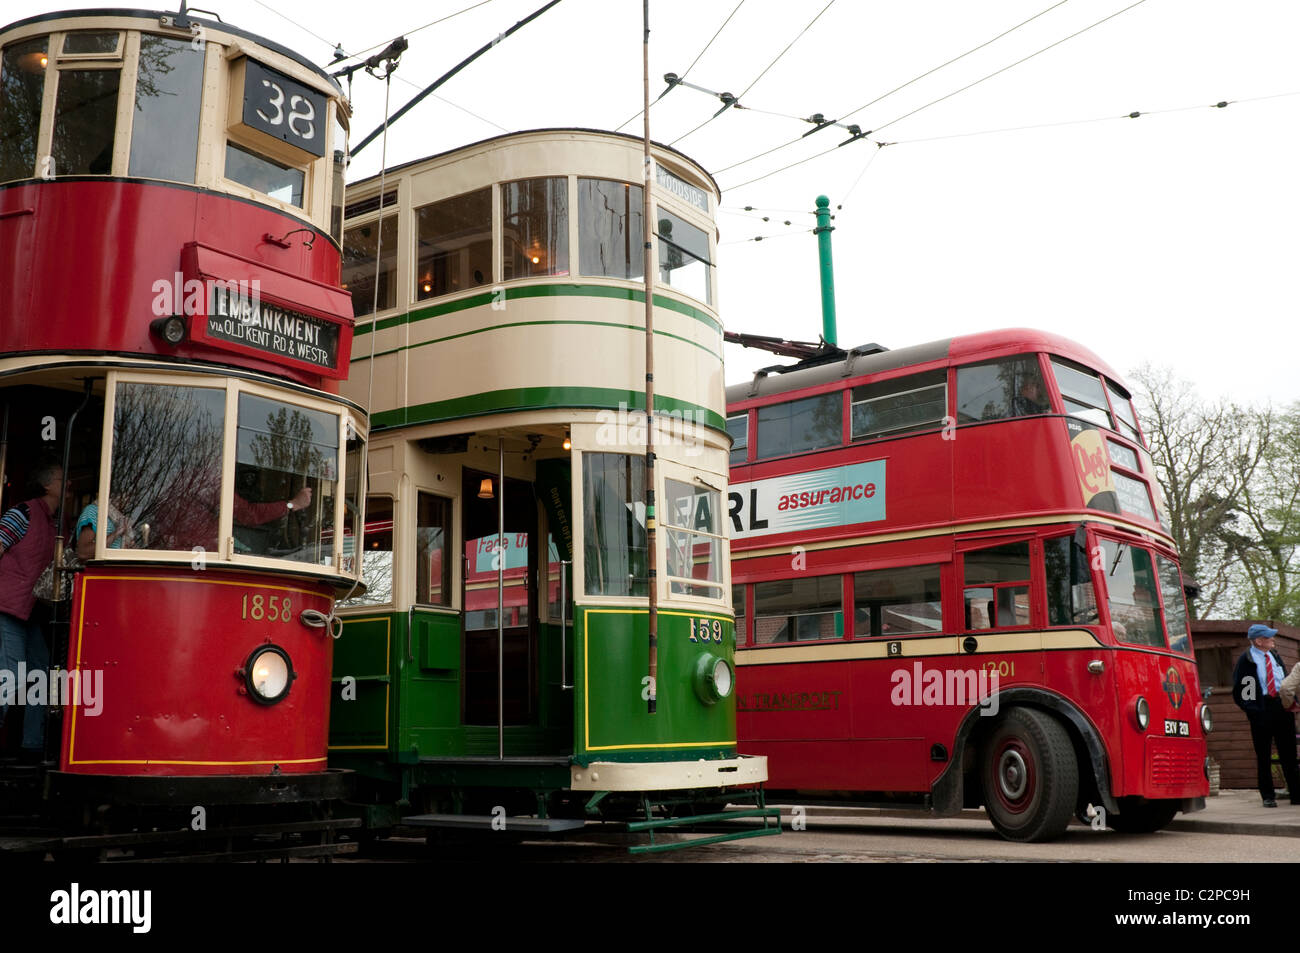 Oldtimer Transport rot/Creme Straßenbahn, grün/Creme Straßenbahn und roten Bus Transport Museum Suffolk UK Vintage Transport Touristen locken Stockfoto